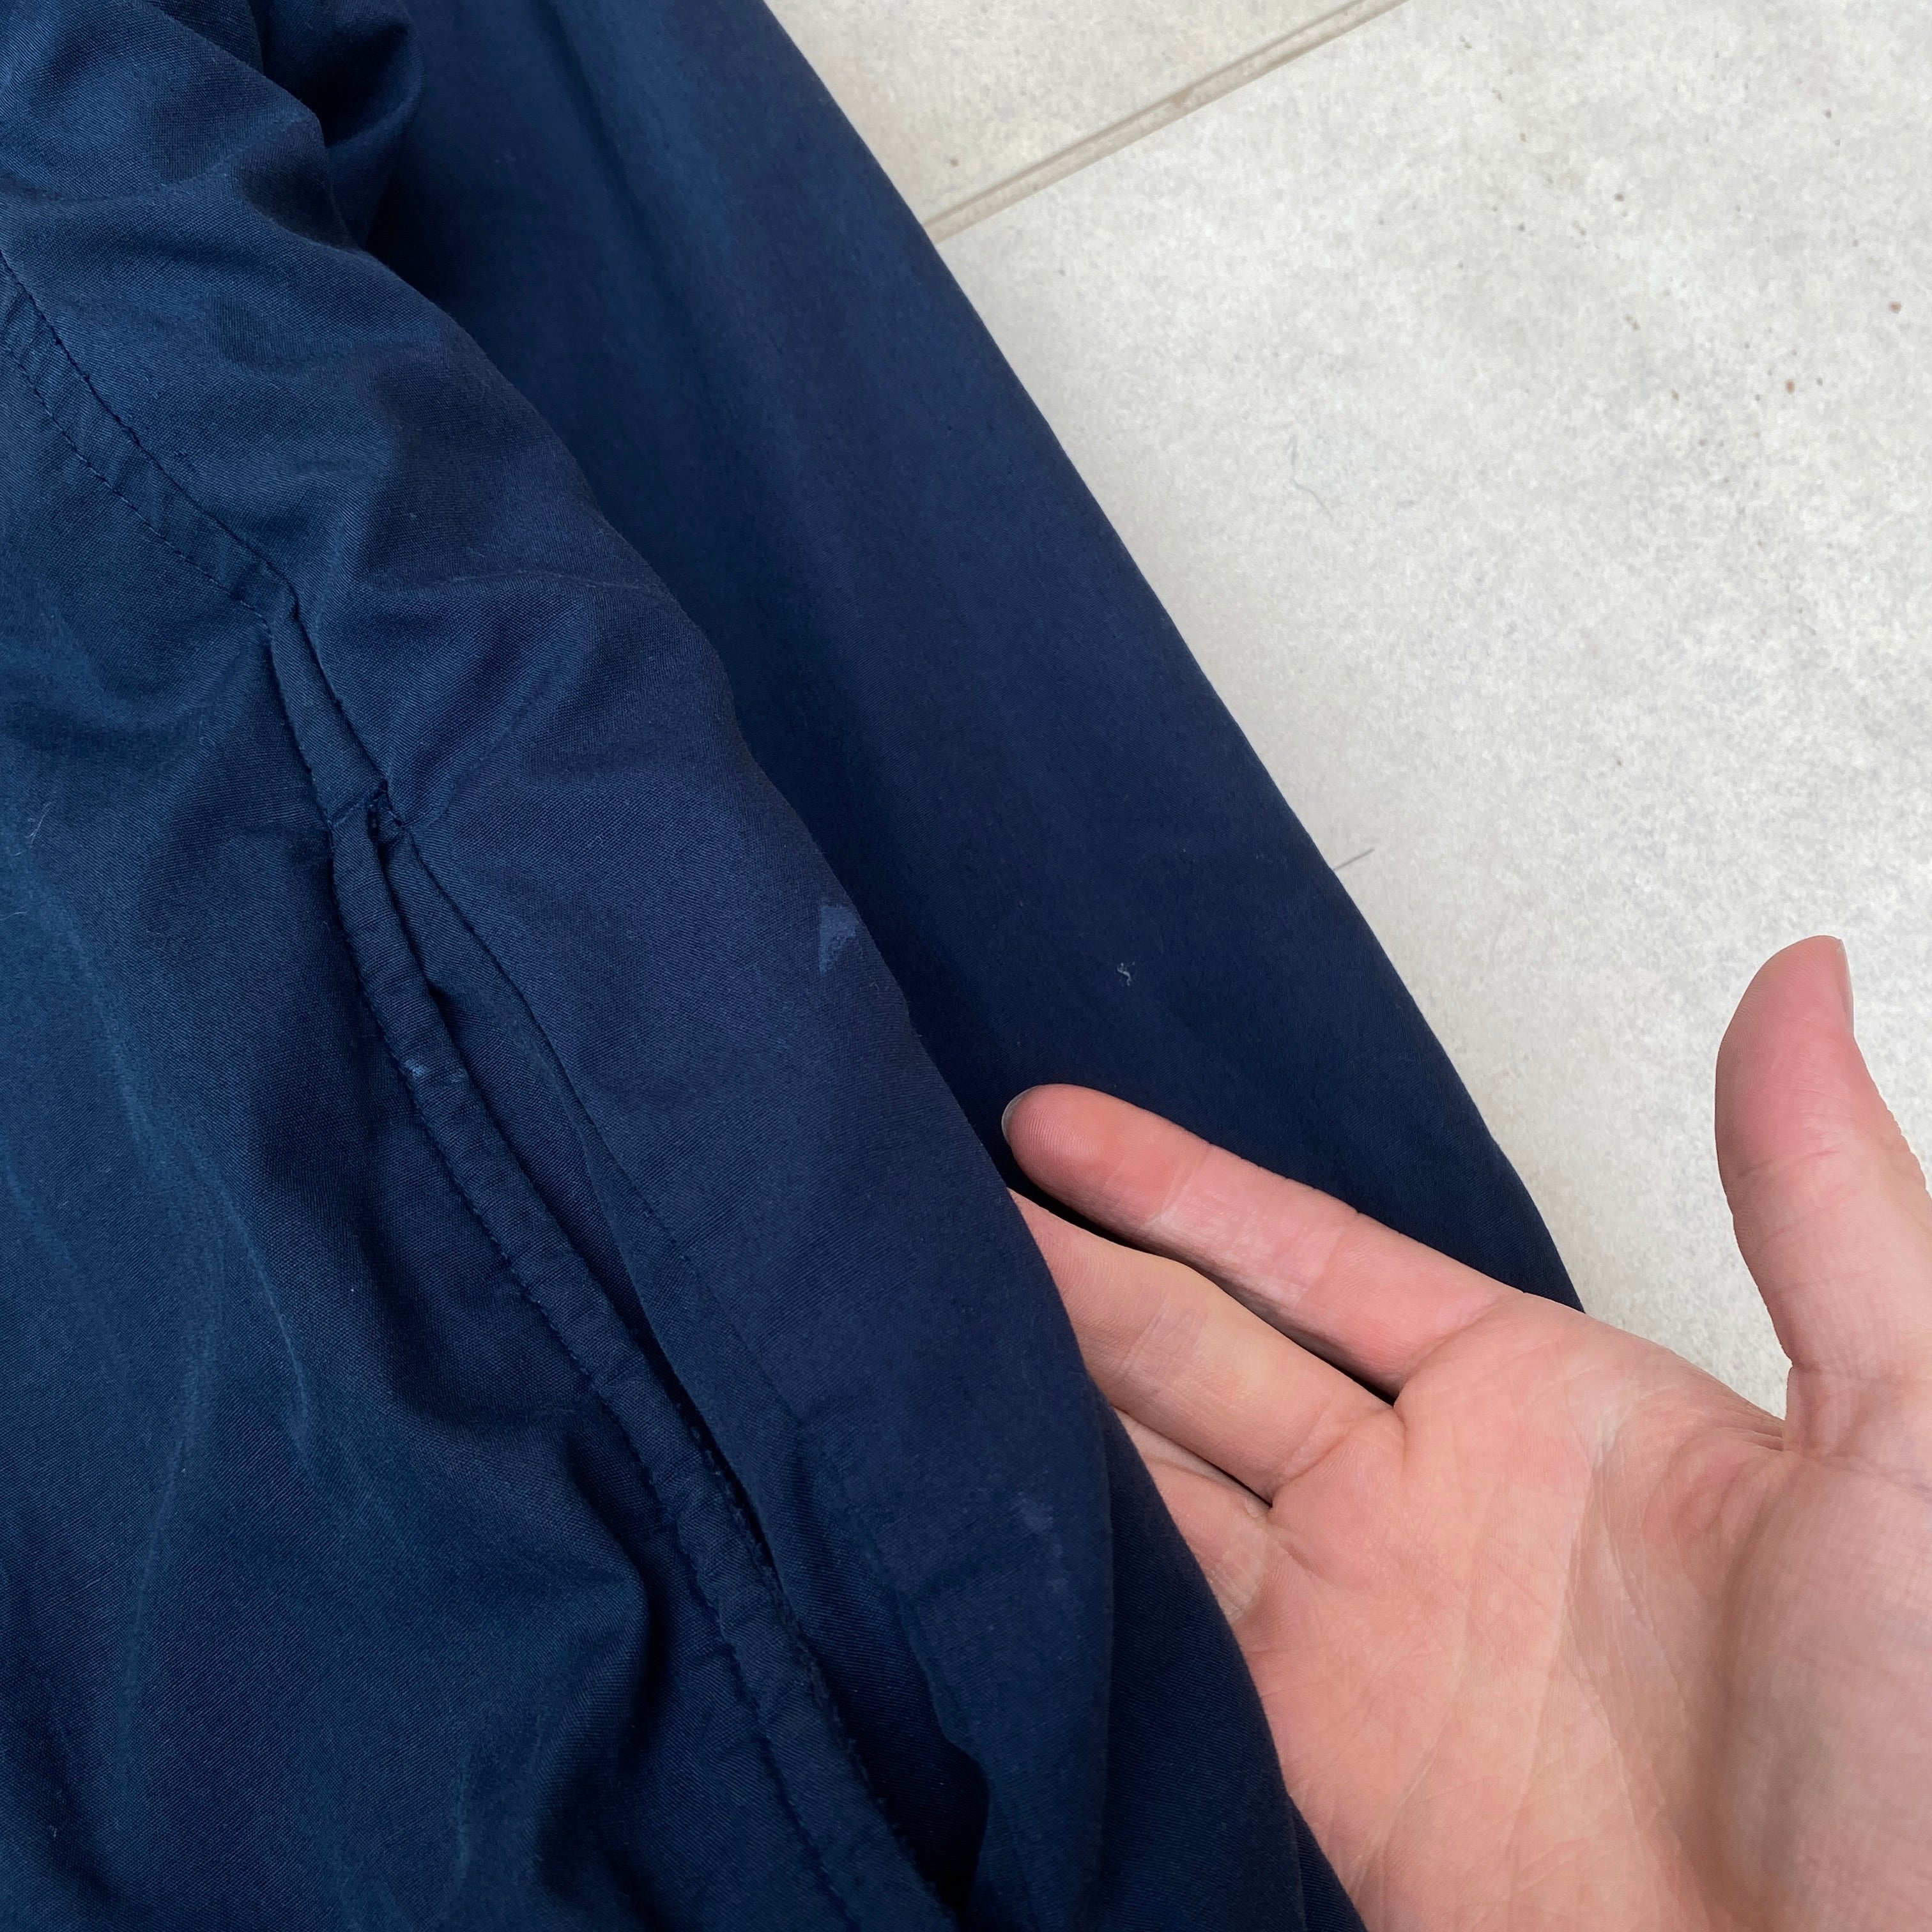 90s Nike Reversible Fleece Coat Jacket Blue Small